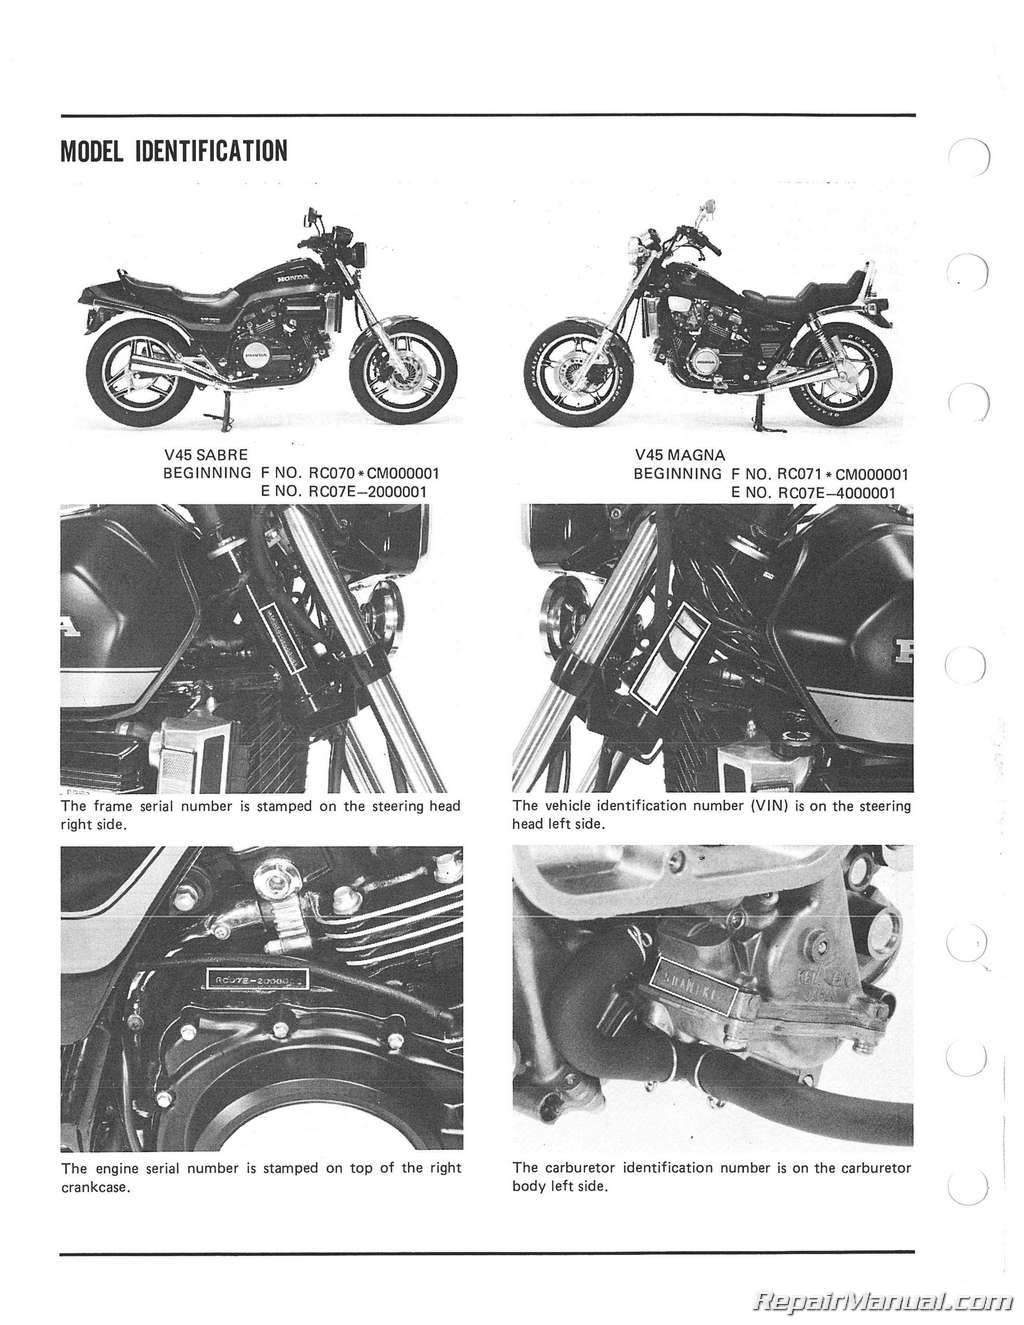 1982 Honda magna v45 750 manual pdf #4